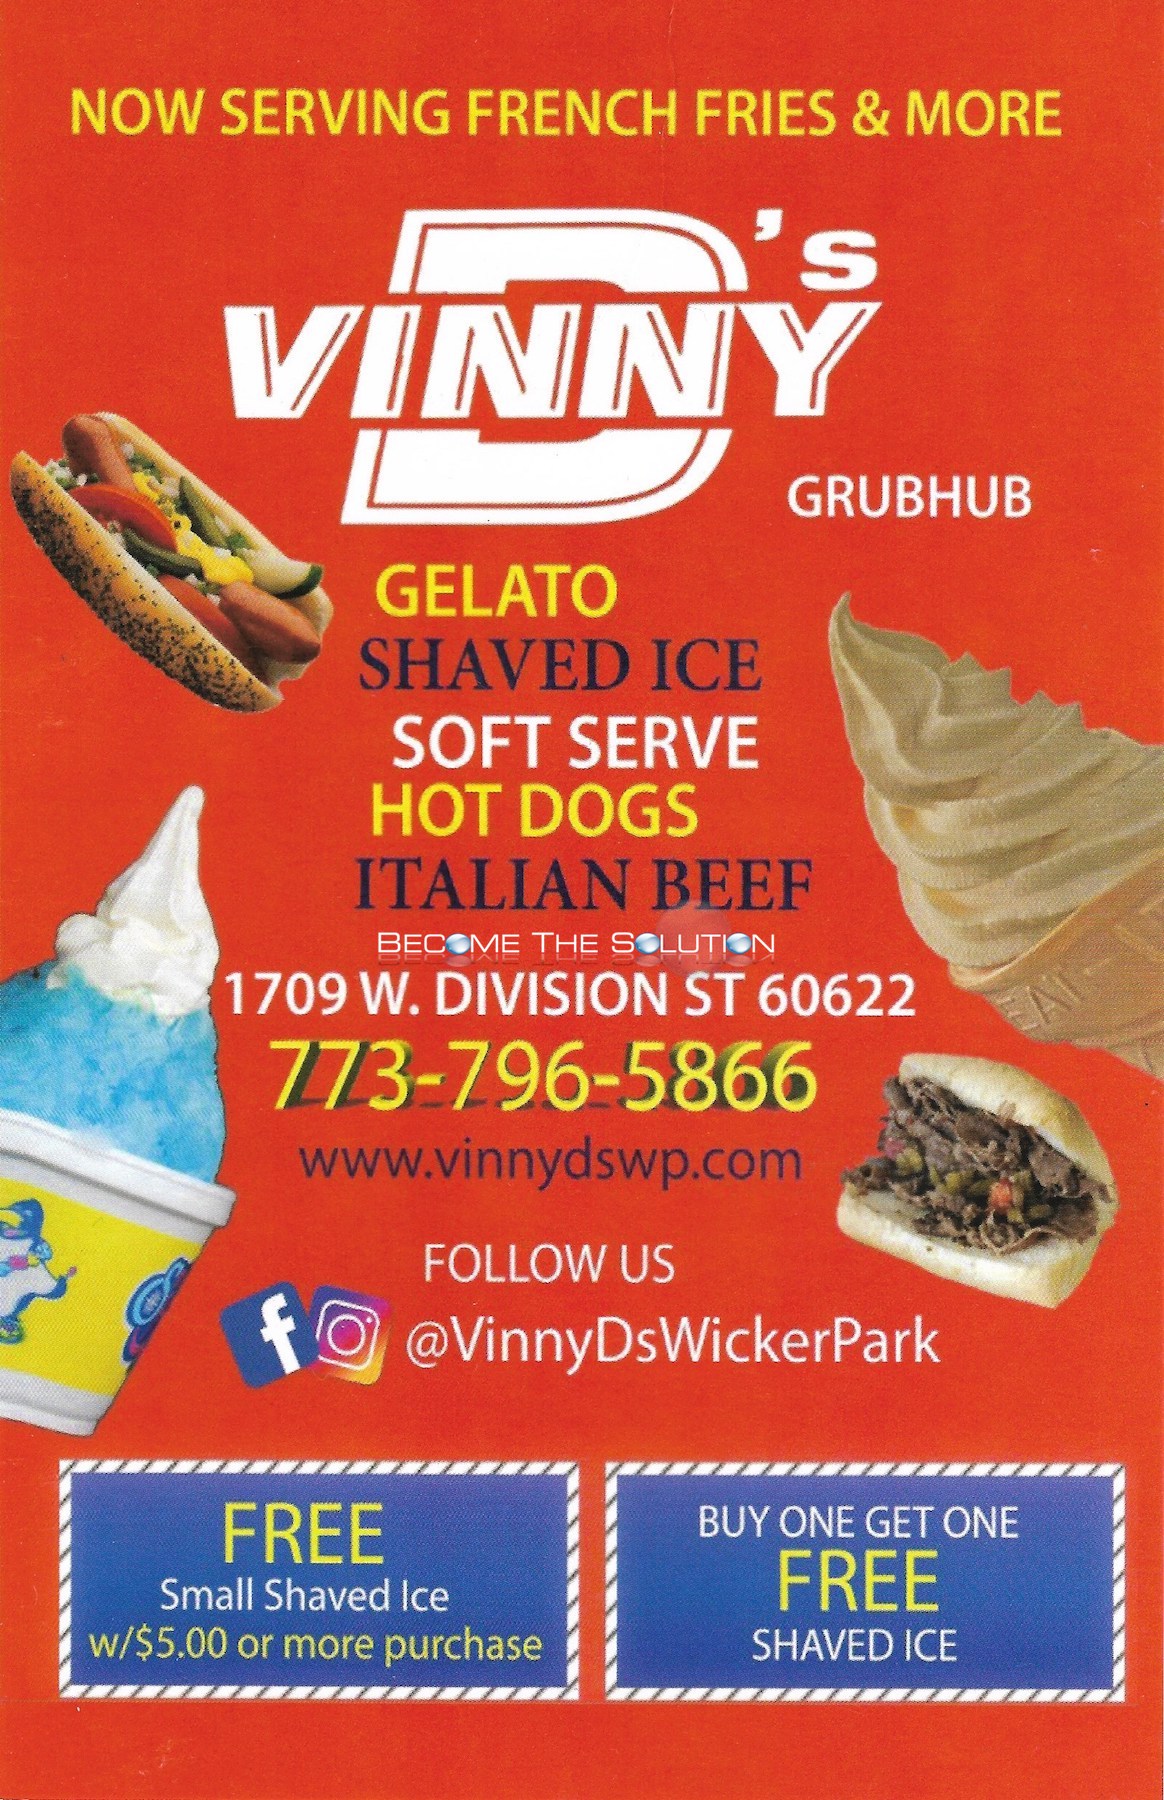 Vinny d's chicago menu 1